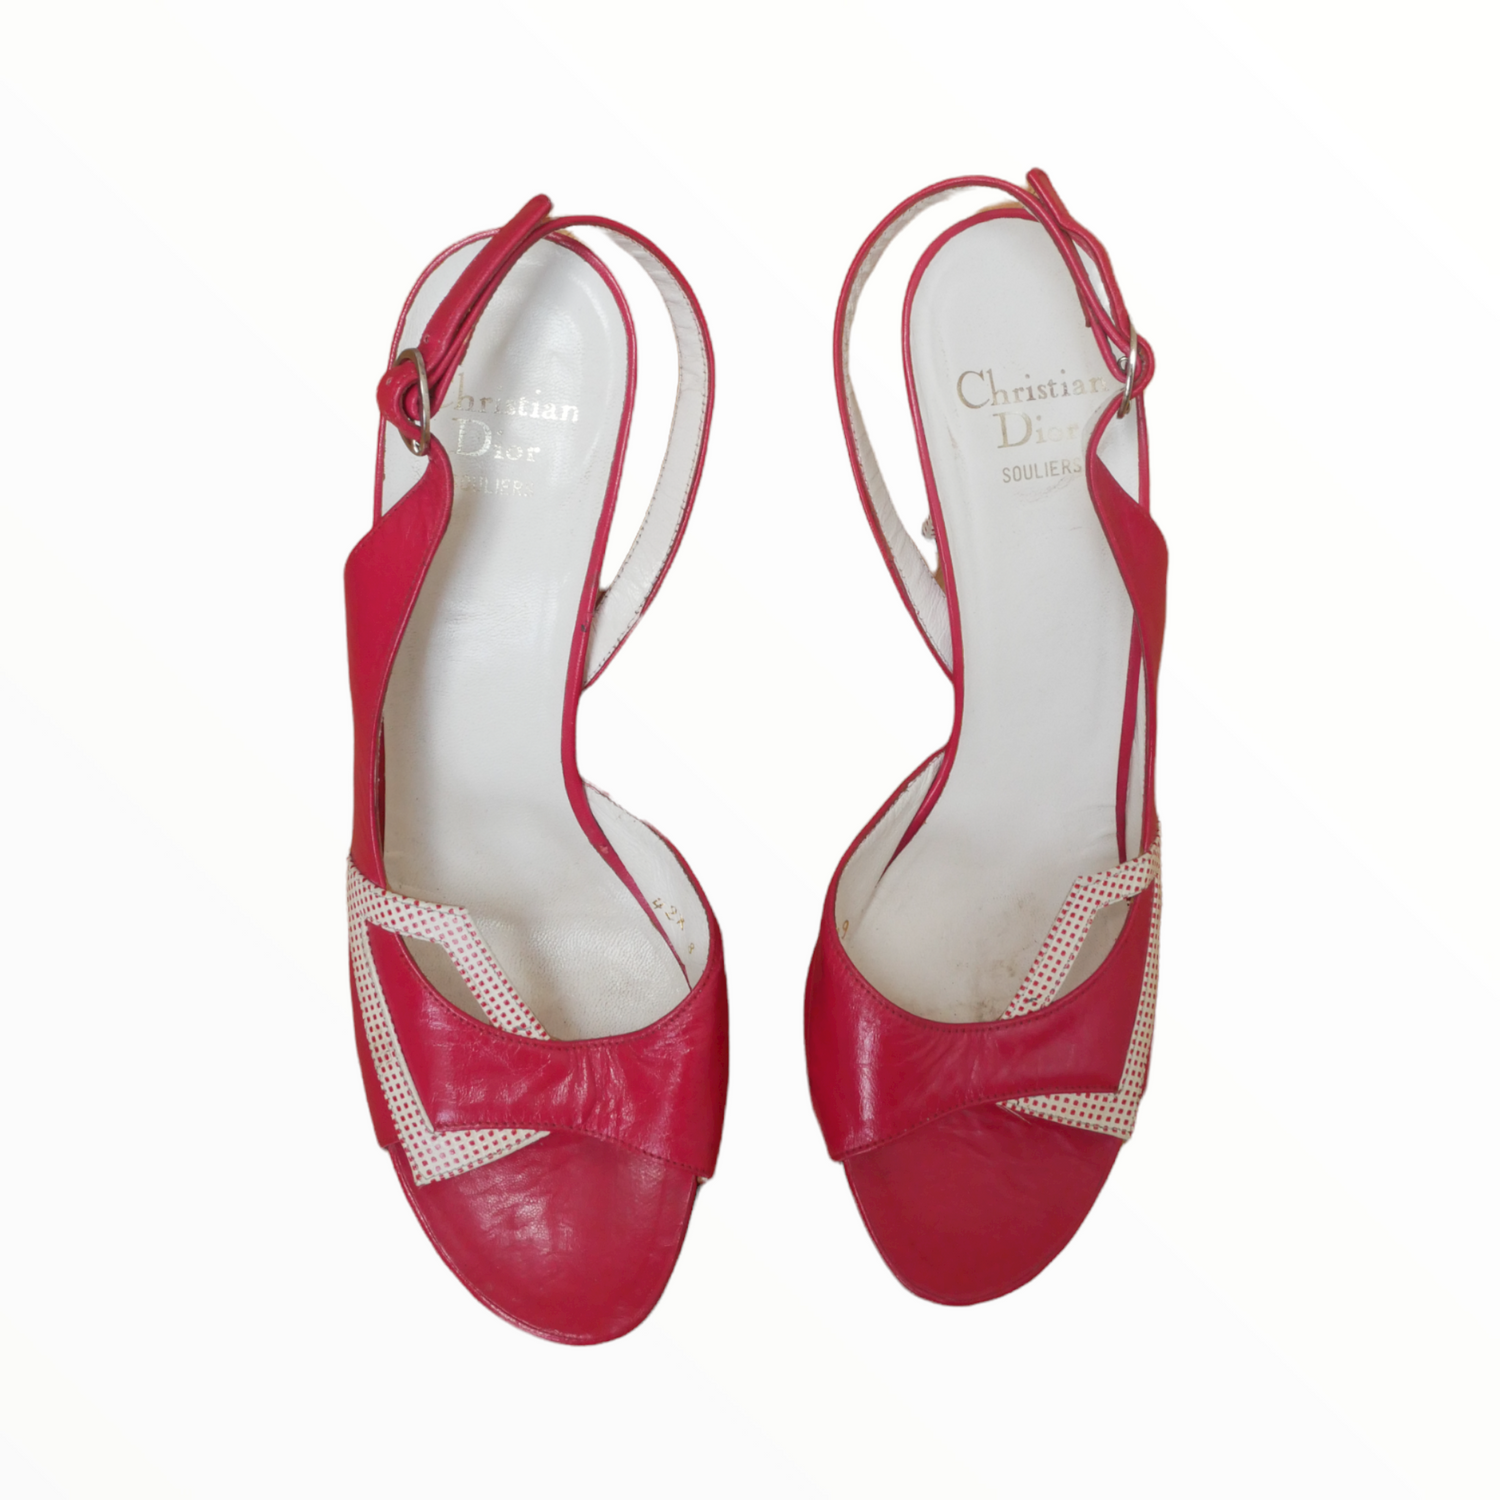 Tootsie Cph  Vintage Dior shoes size 395 900 kr   Facebook